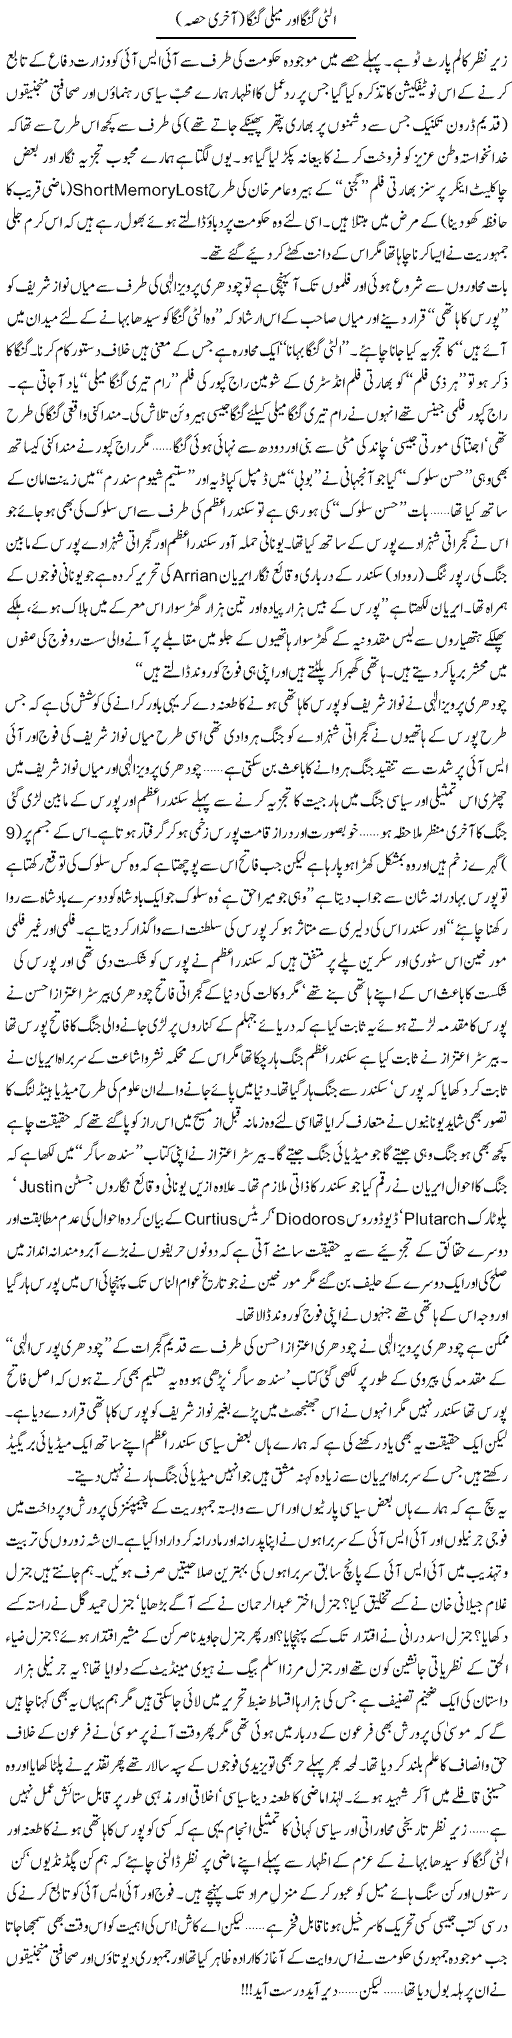 Pak Army and Nawaz Sharif Express Column Tahir Sarwar 20 June 2011